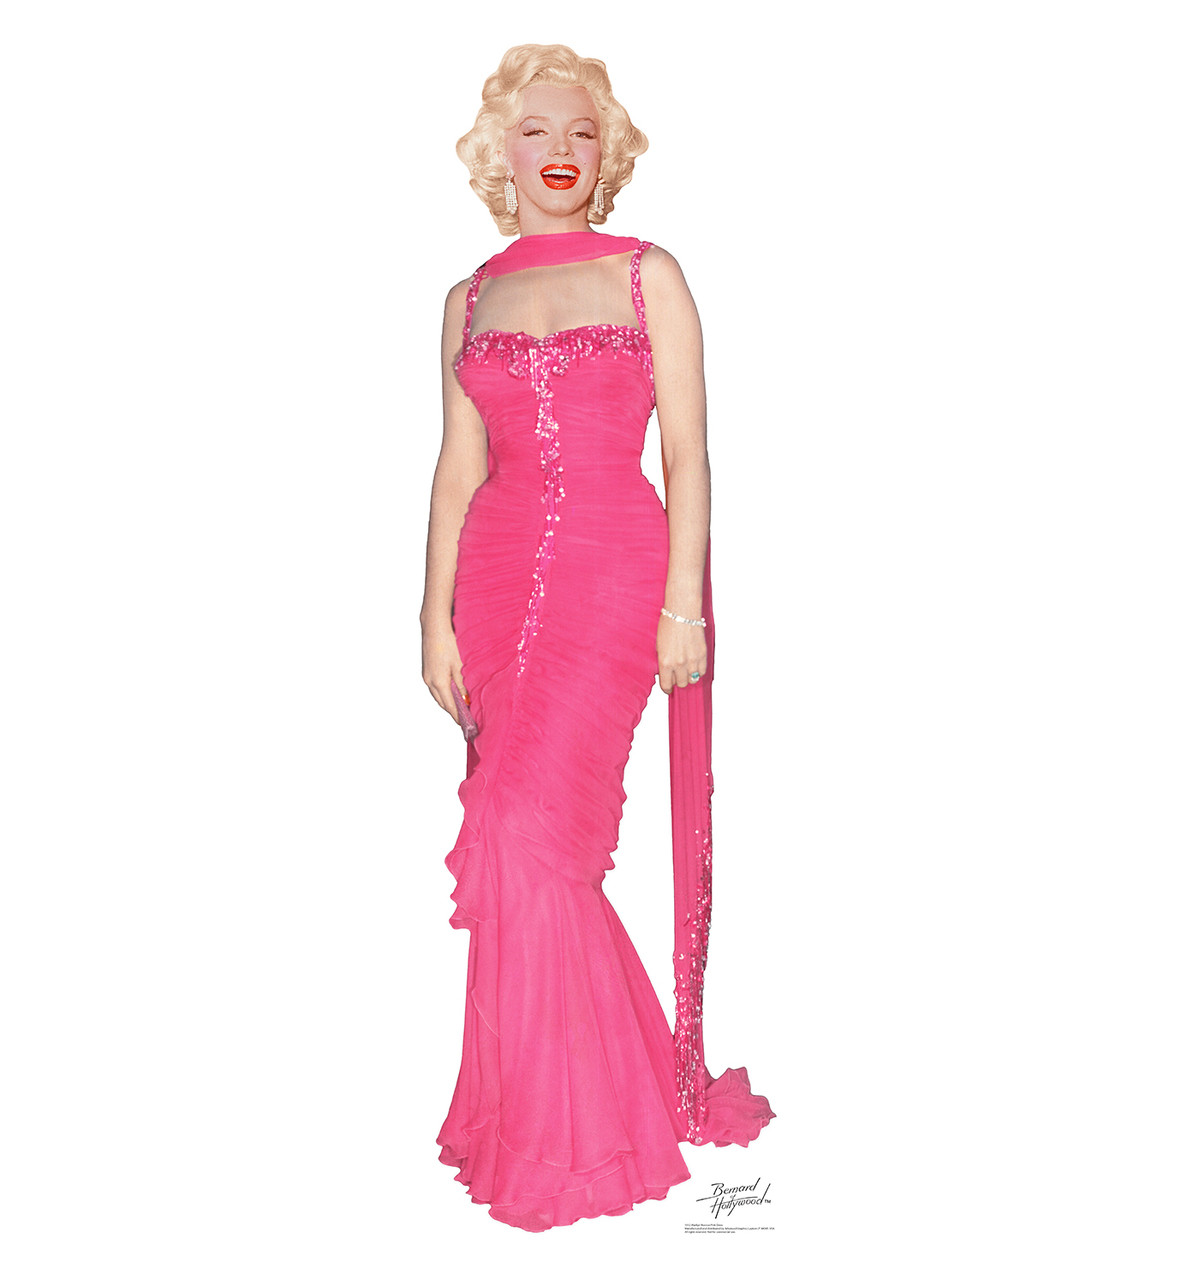 Life-size Marilyn Monroe Pink Dress Cardboard Standup | Cardboard Cutout